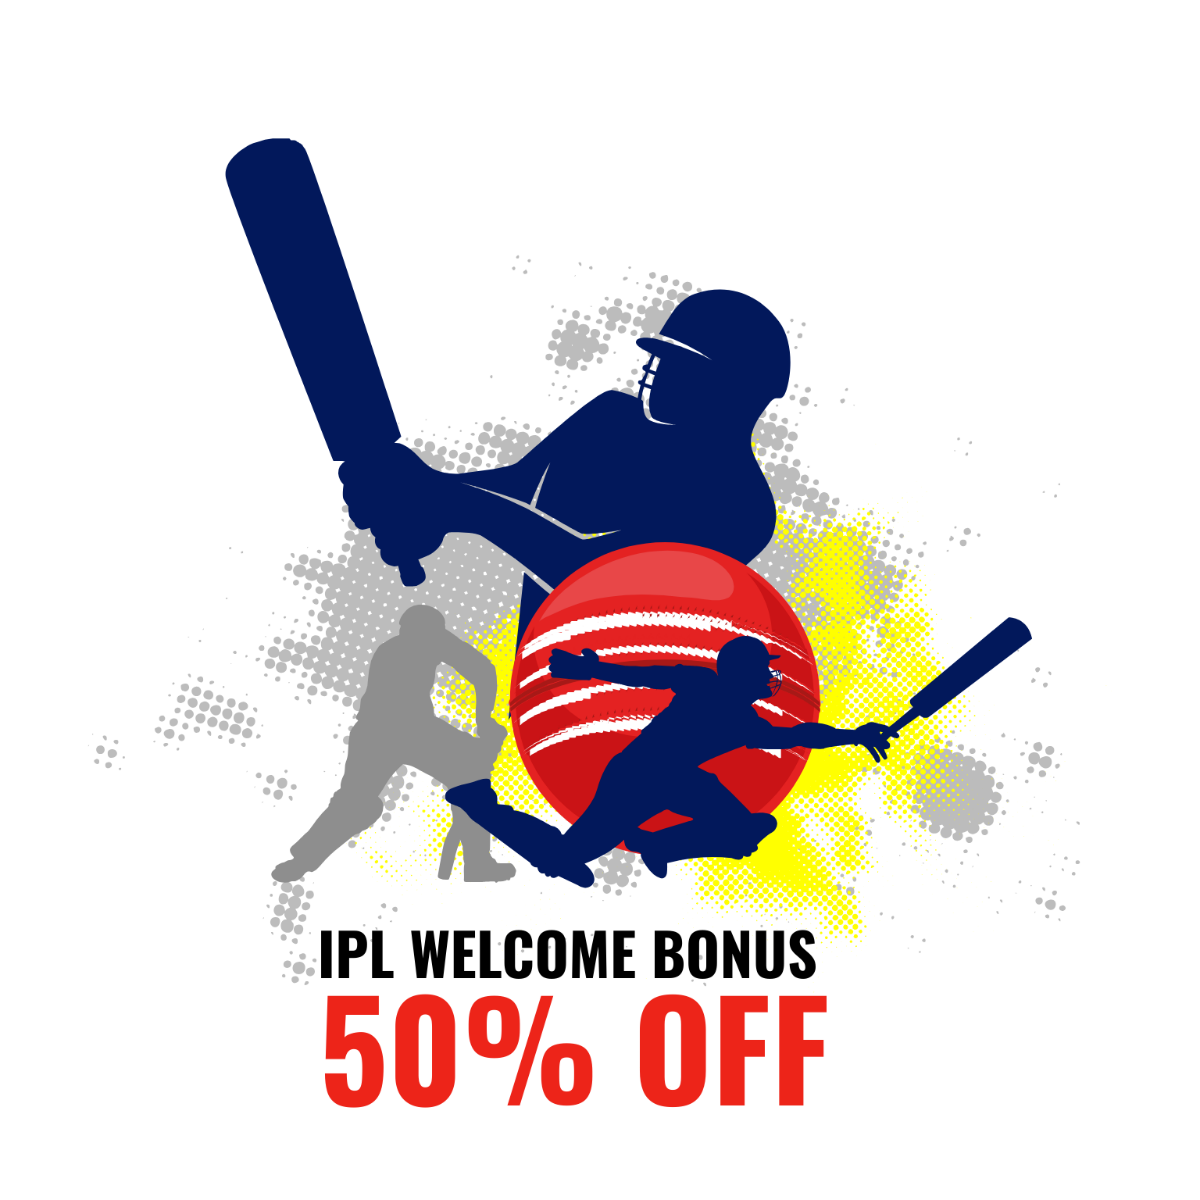 IPL Welcome Bonus Offer Design